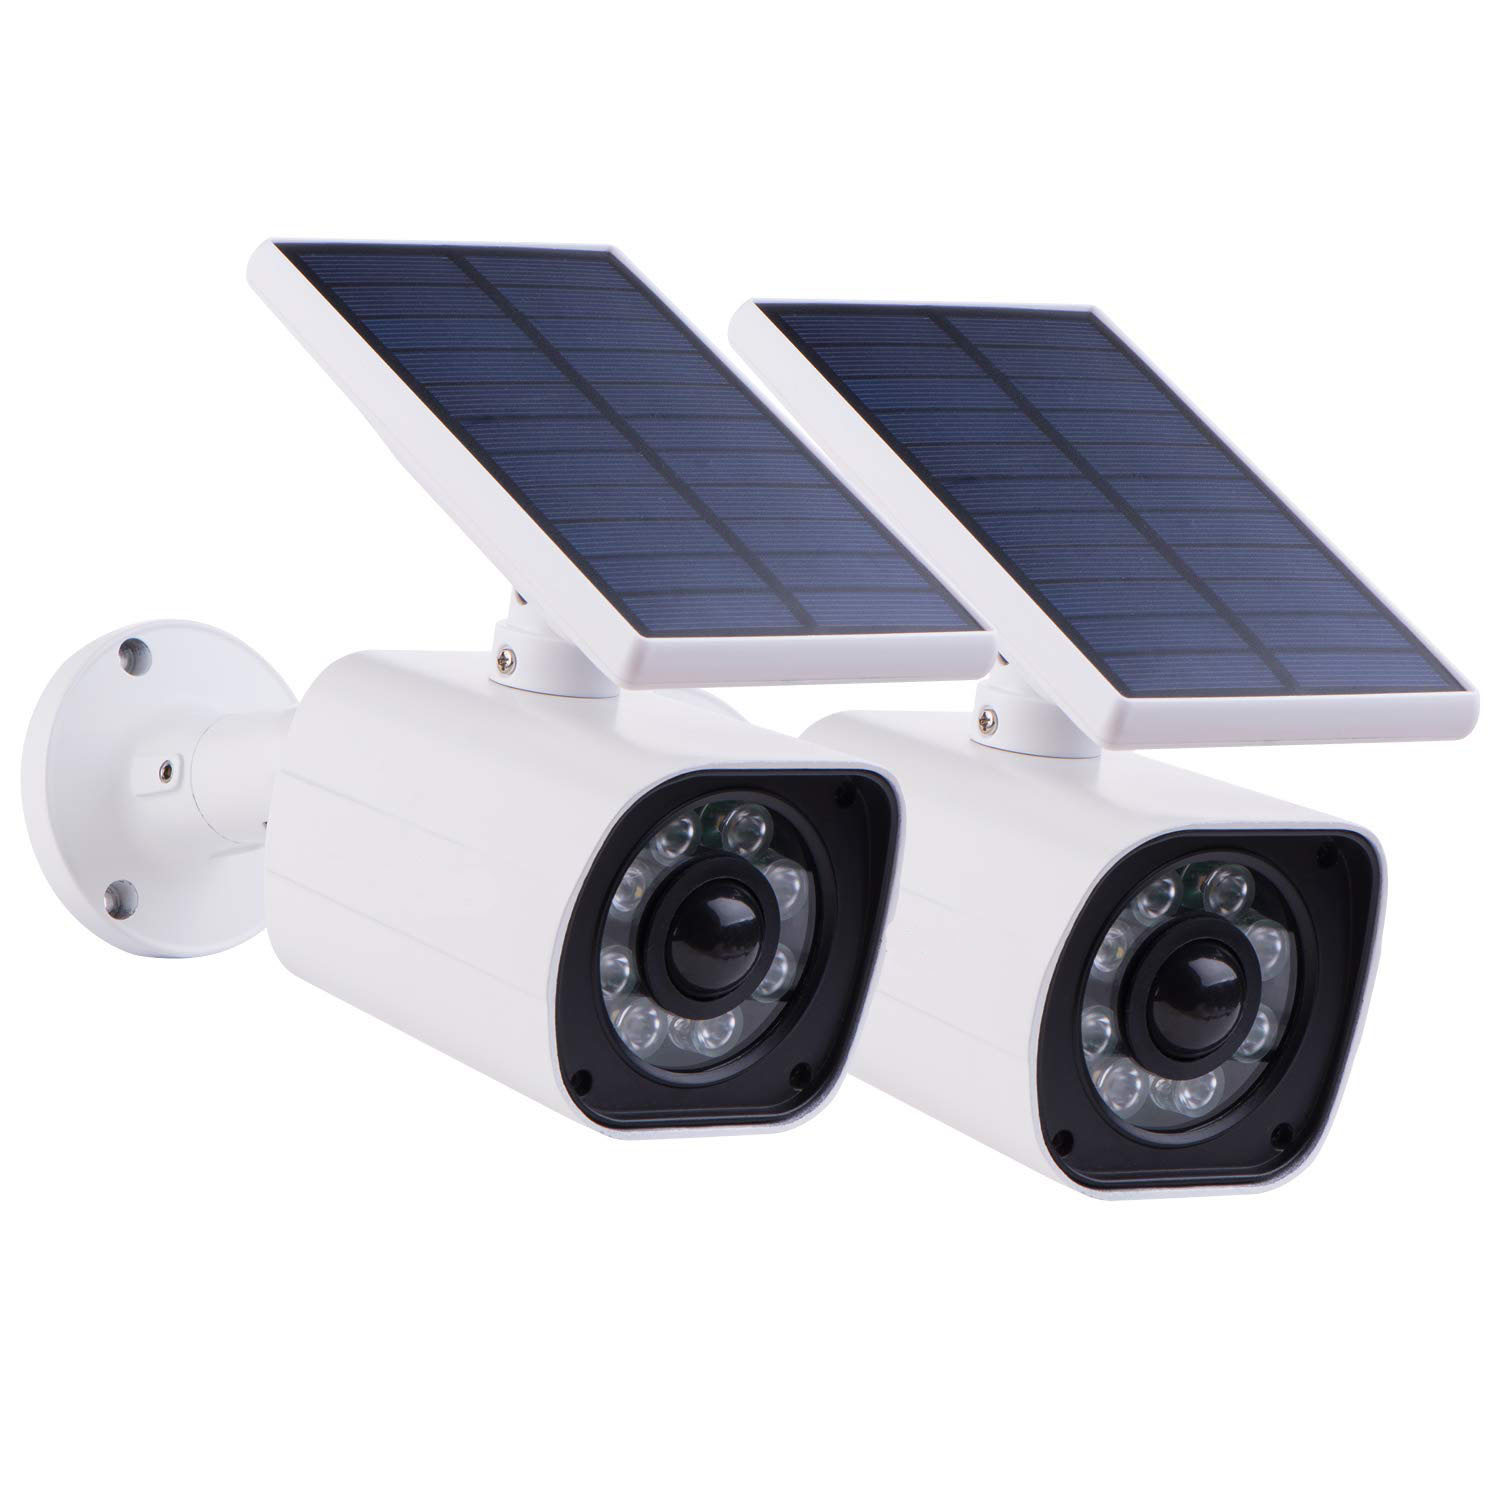 2 Pack Solar Motion Sensor Light, Flood Light Security Super LED Outdoor Light met waterdichte zonne-energie lichten voor garagemand, wandportiek